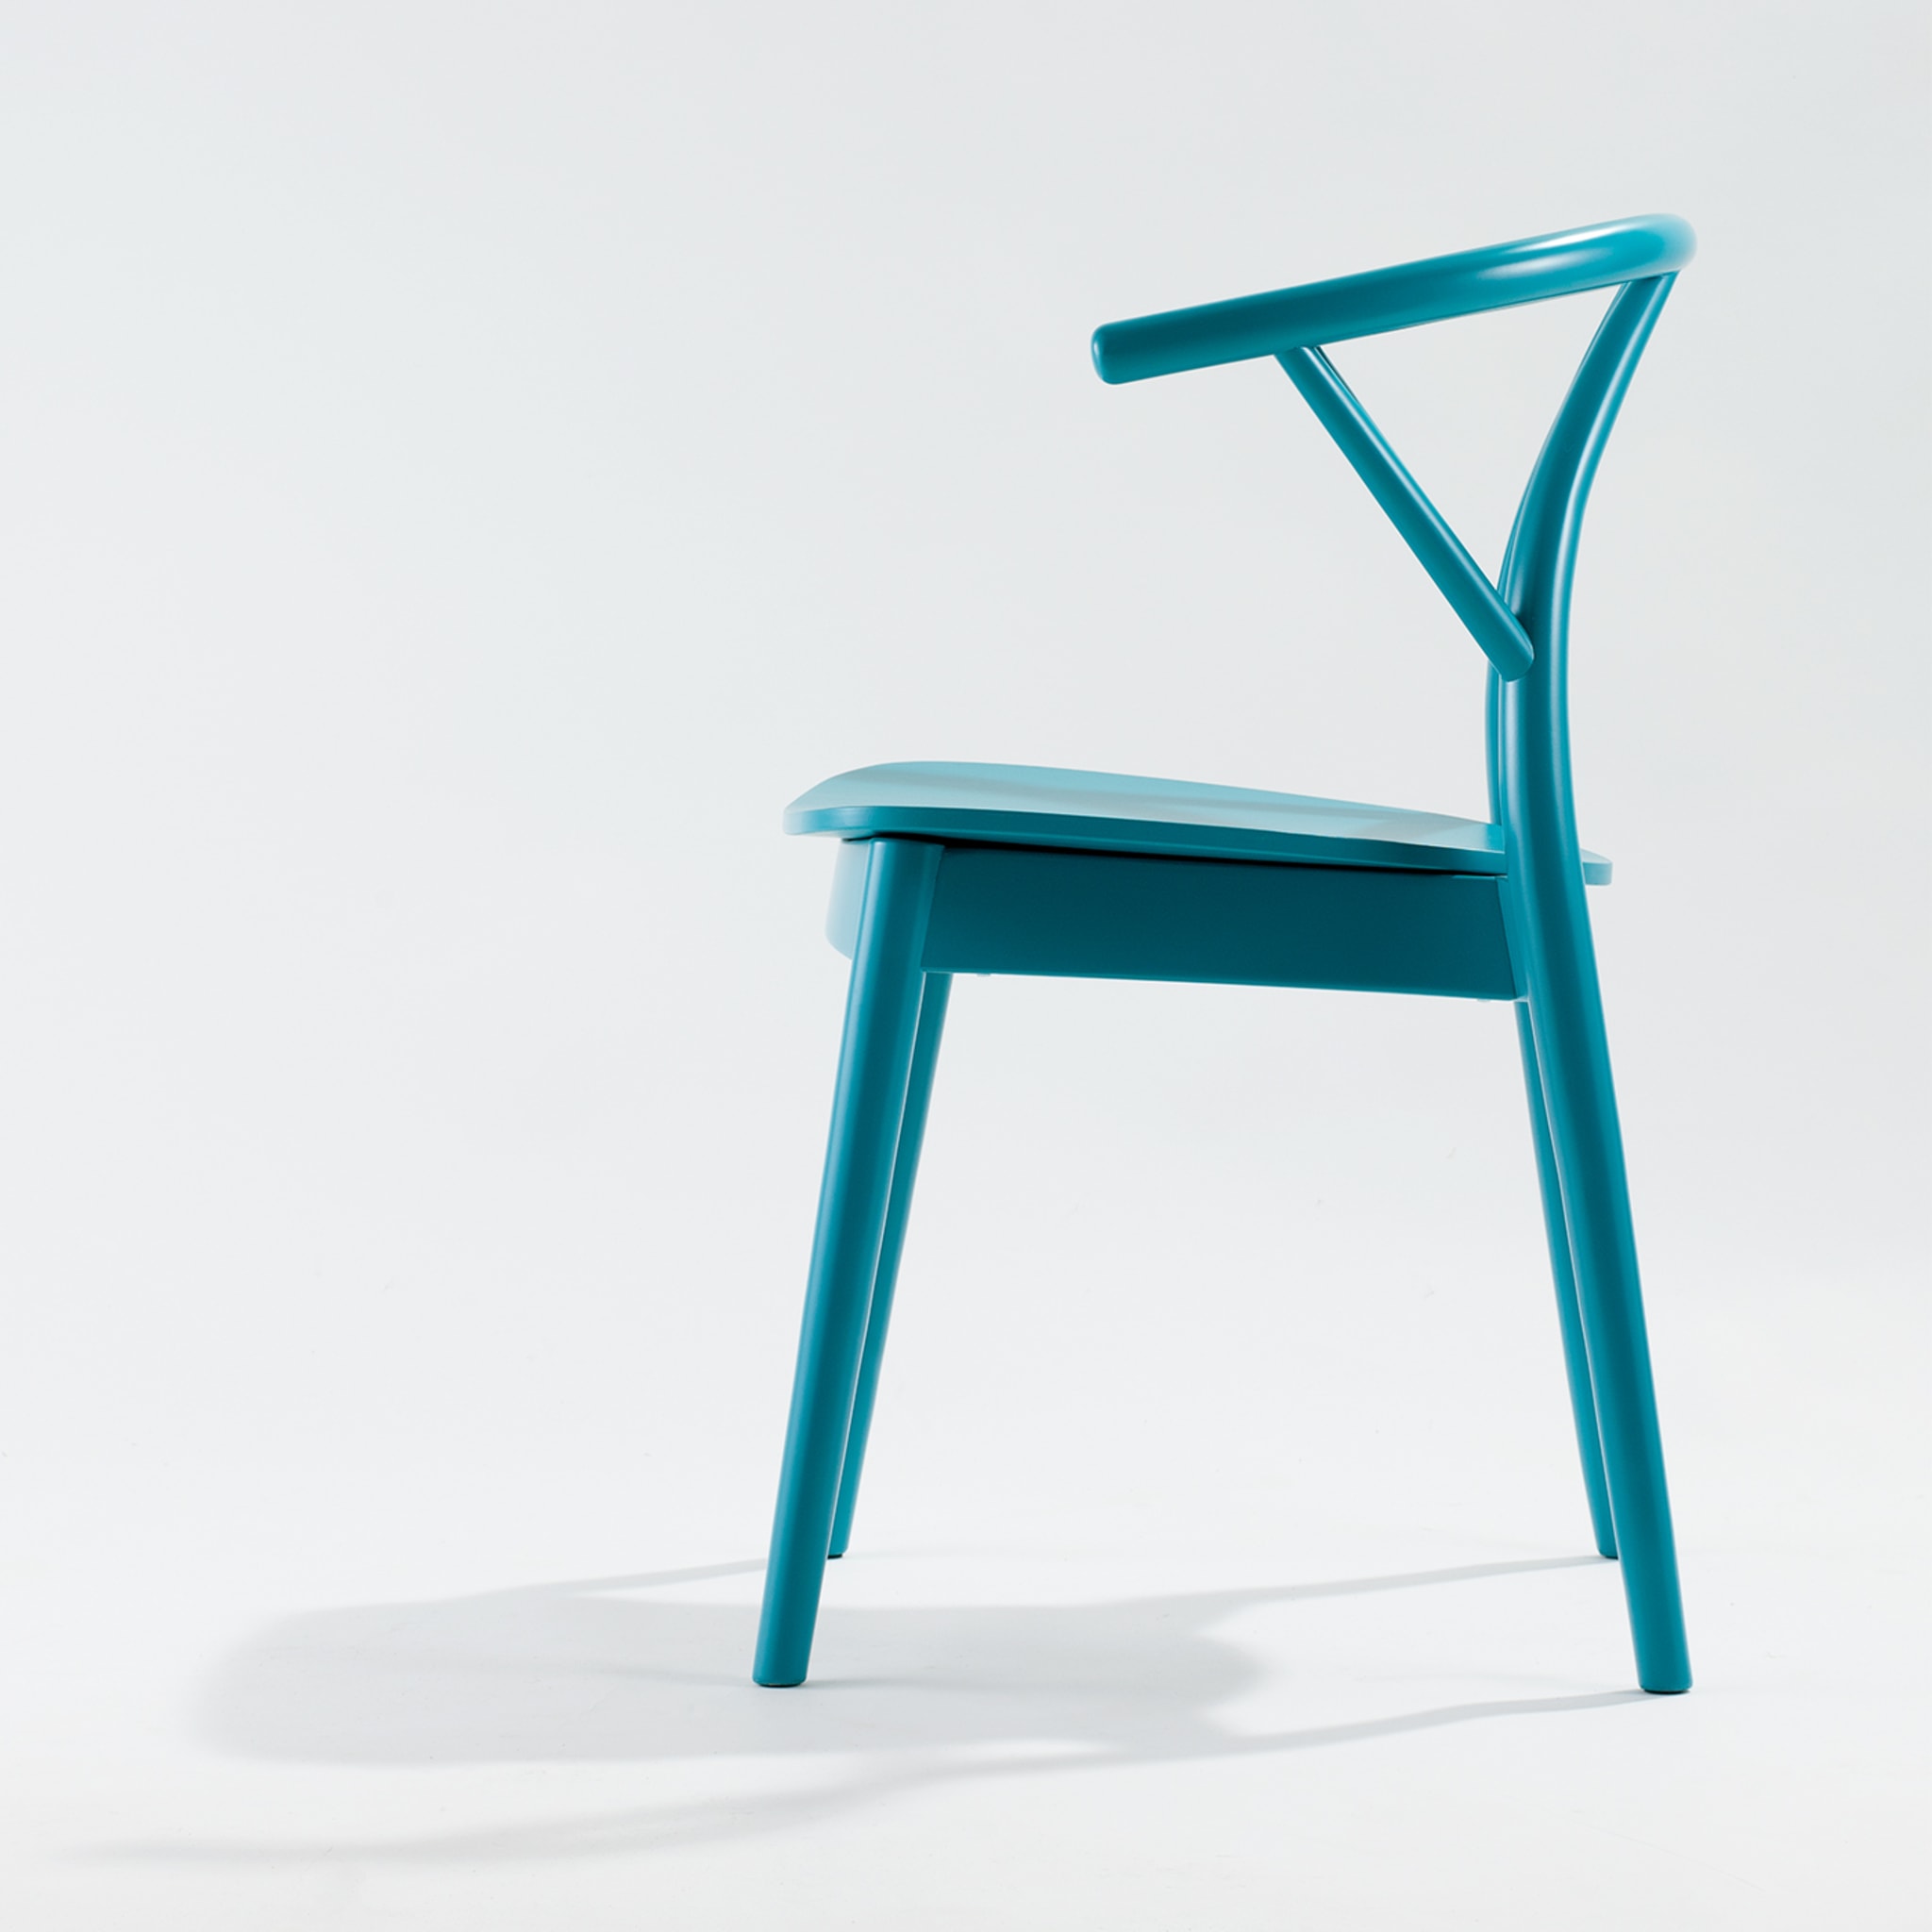 Yelly 971 Light Blue Chair by Markus Johansson - Alternative view 3